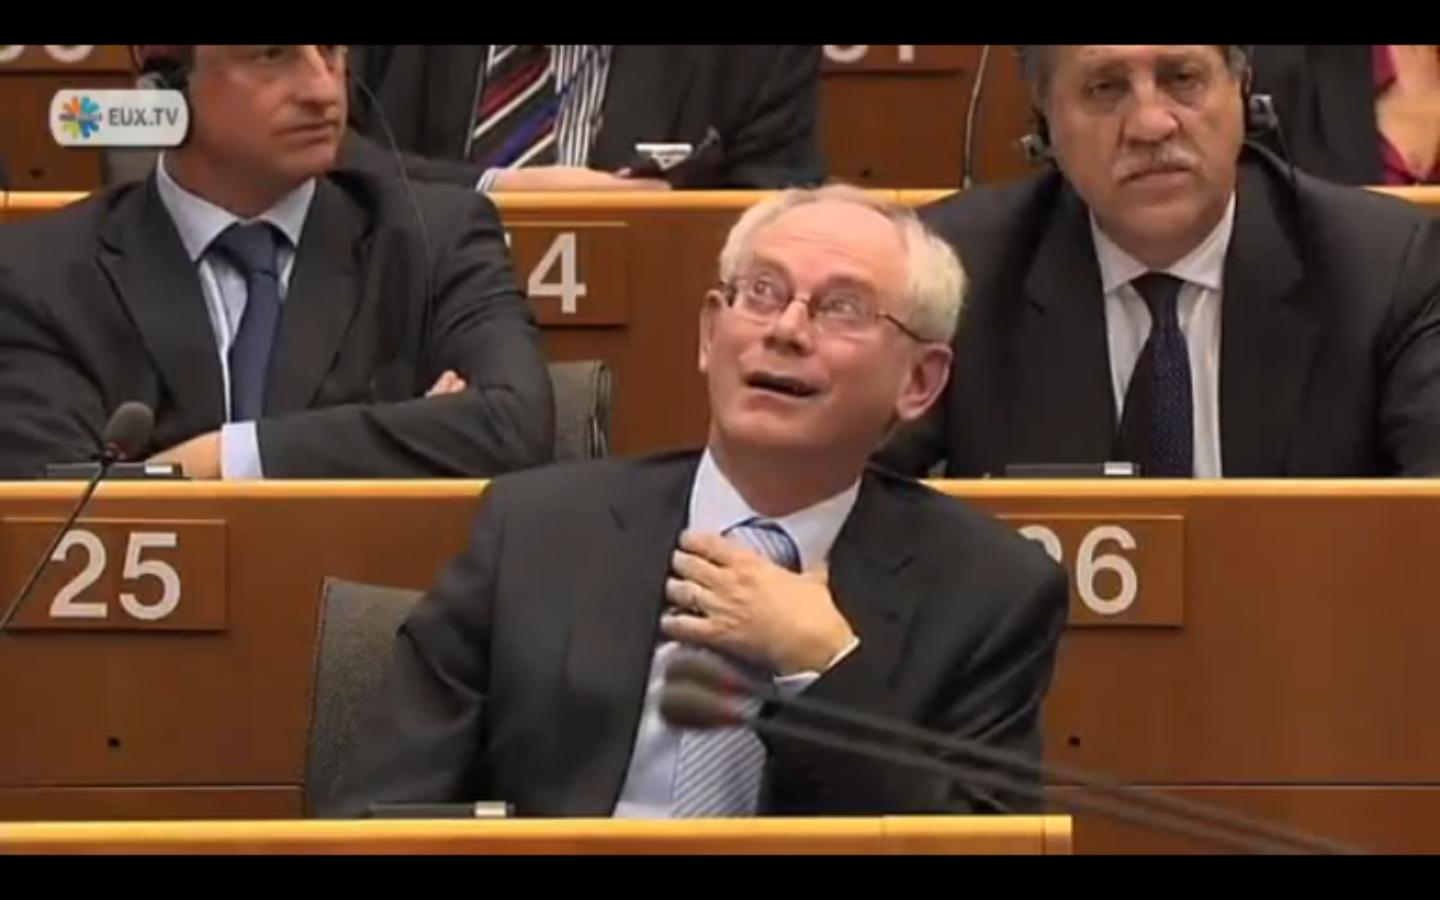 EU, Europaparlamentet, Nigel Farage, Herman Van Rompuy